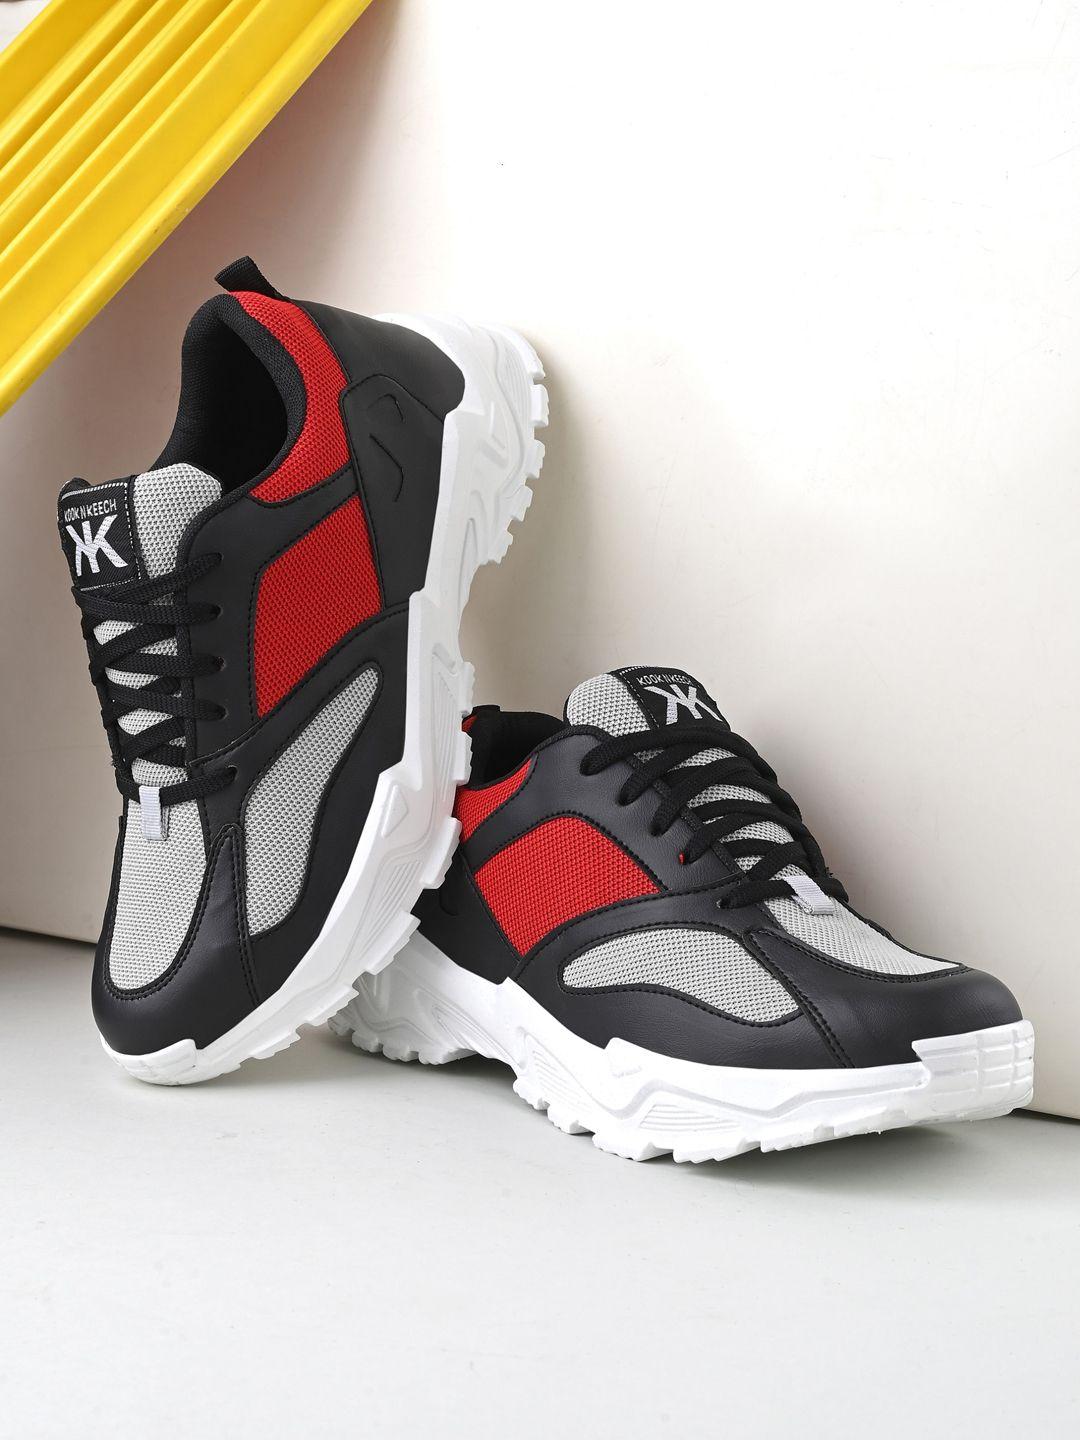 kook n keech men red and black colourblocked lightweight sneakers